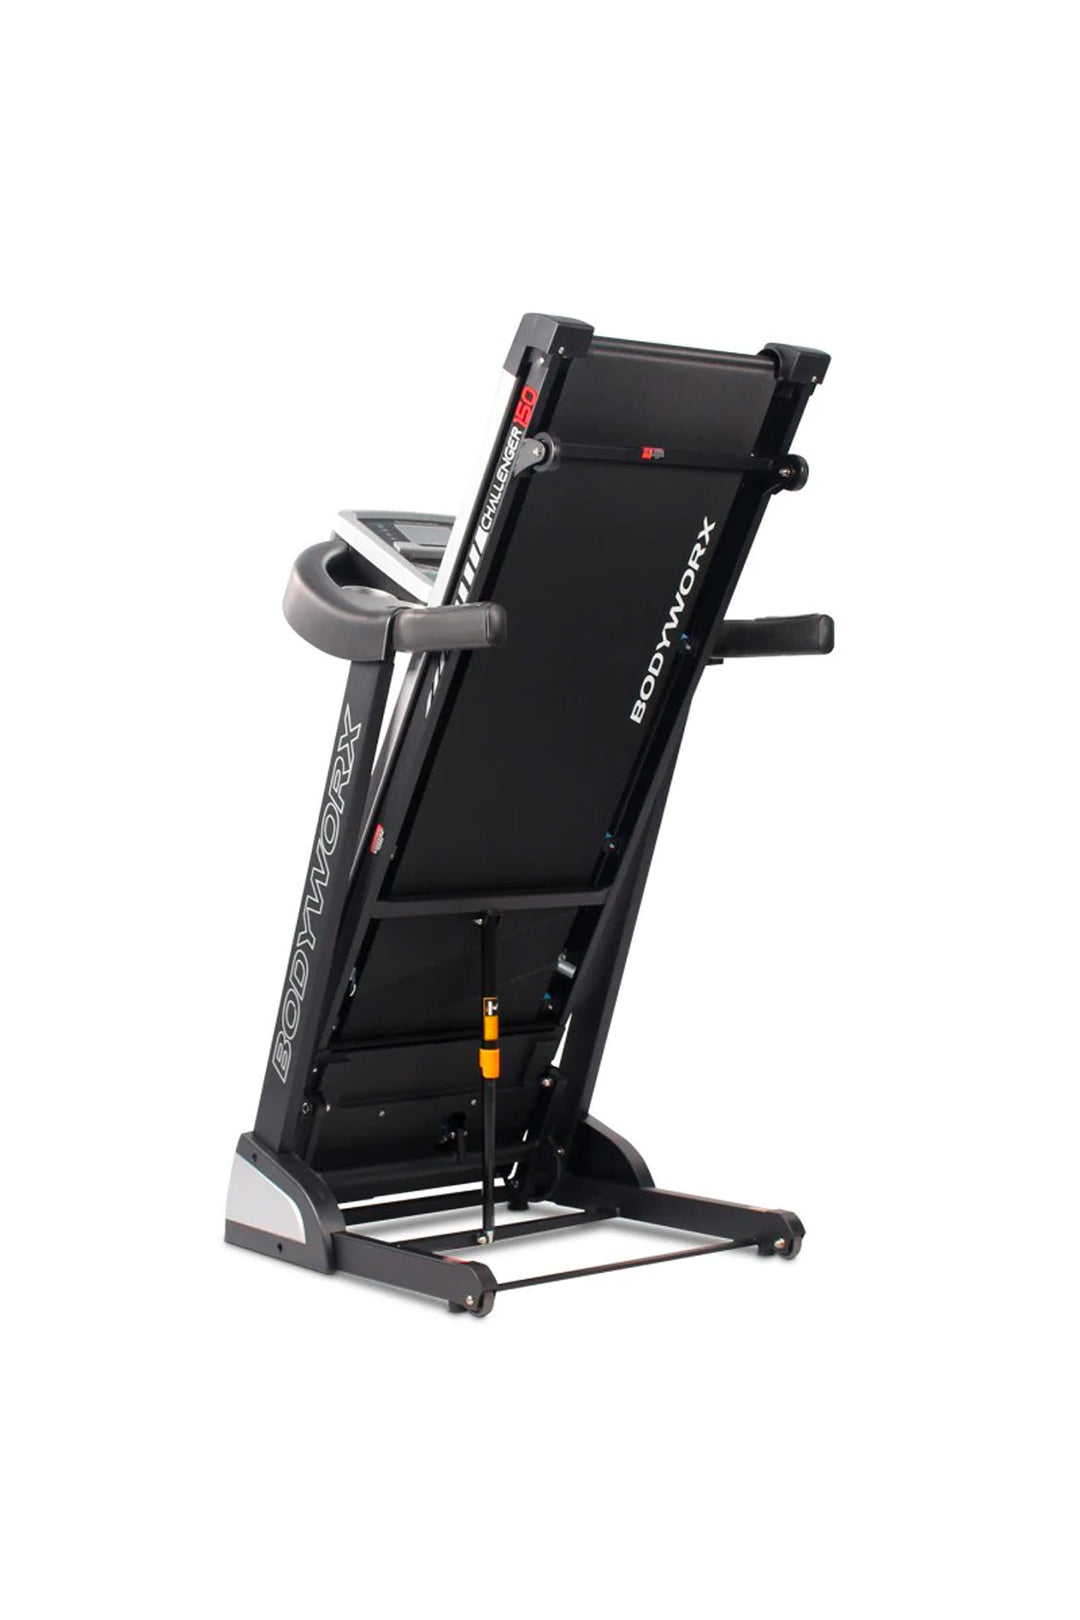 Bodyworx Challenger 150 Treadmill